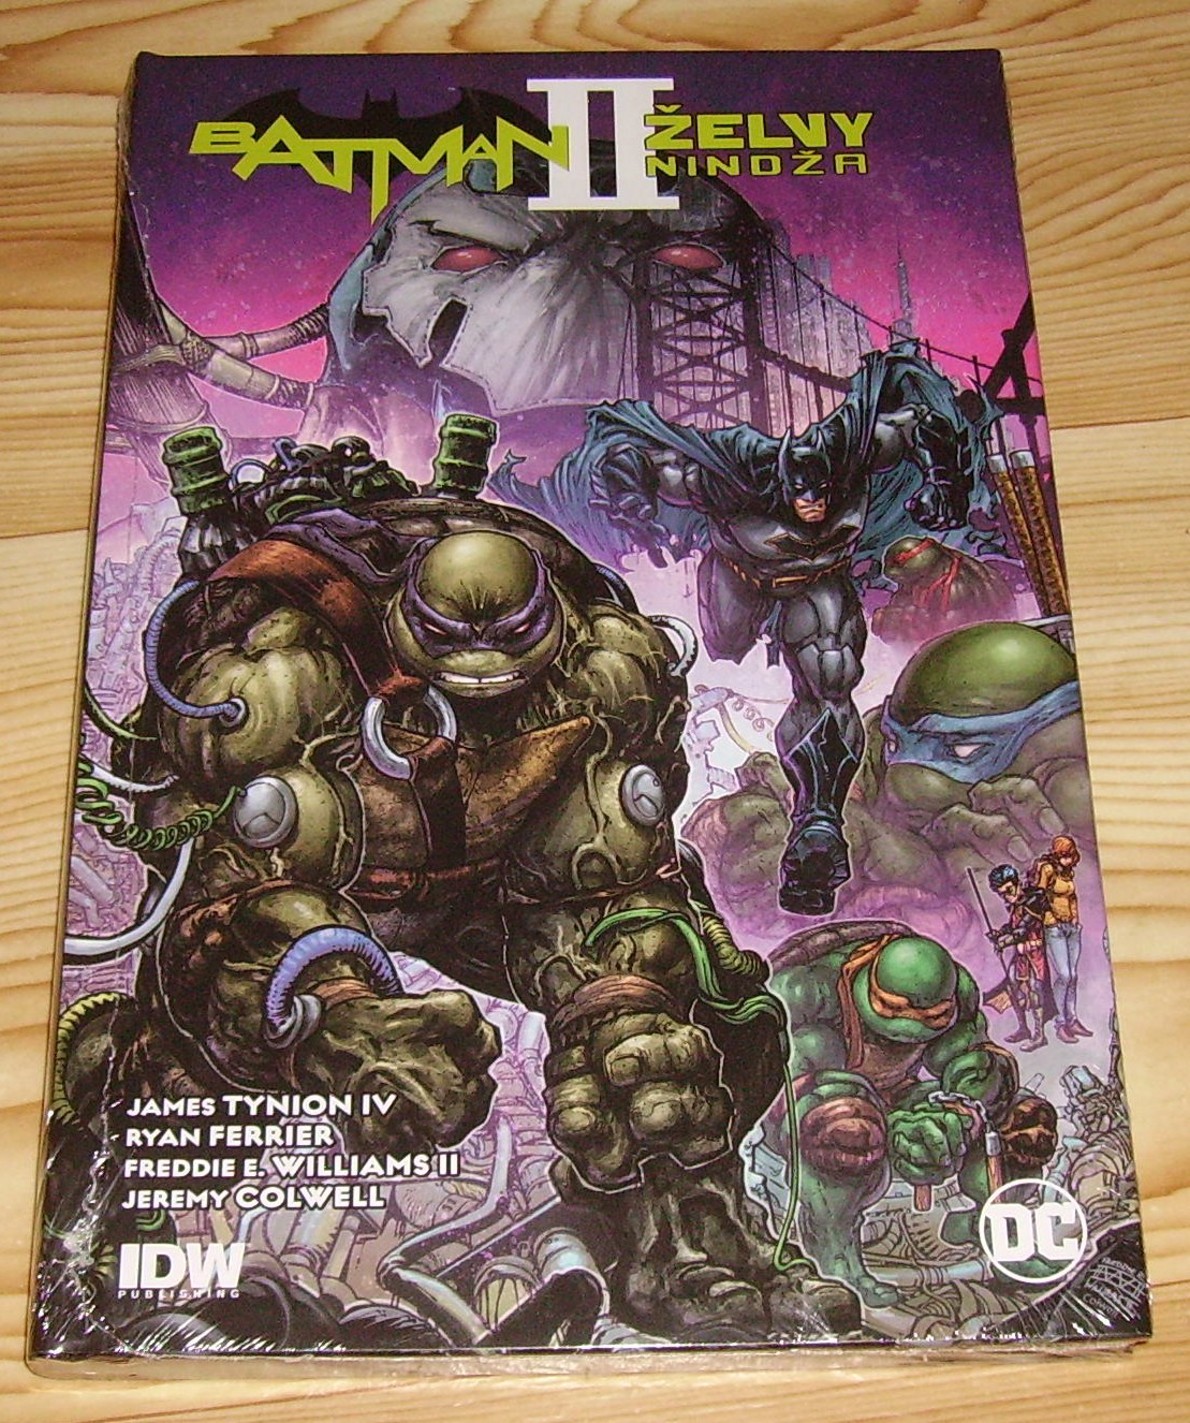 Batman / Želvy nindža II (limitovaná edice) 